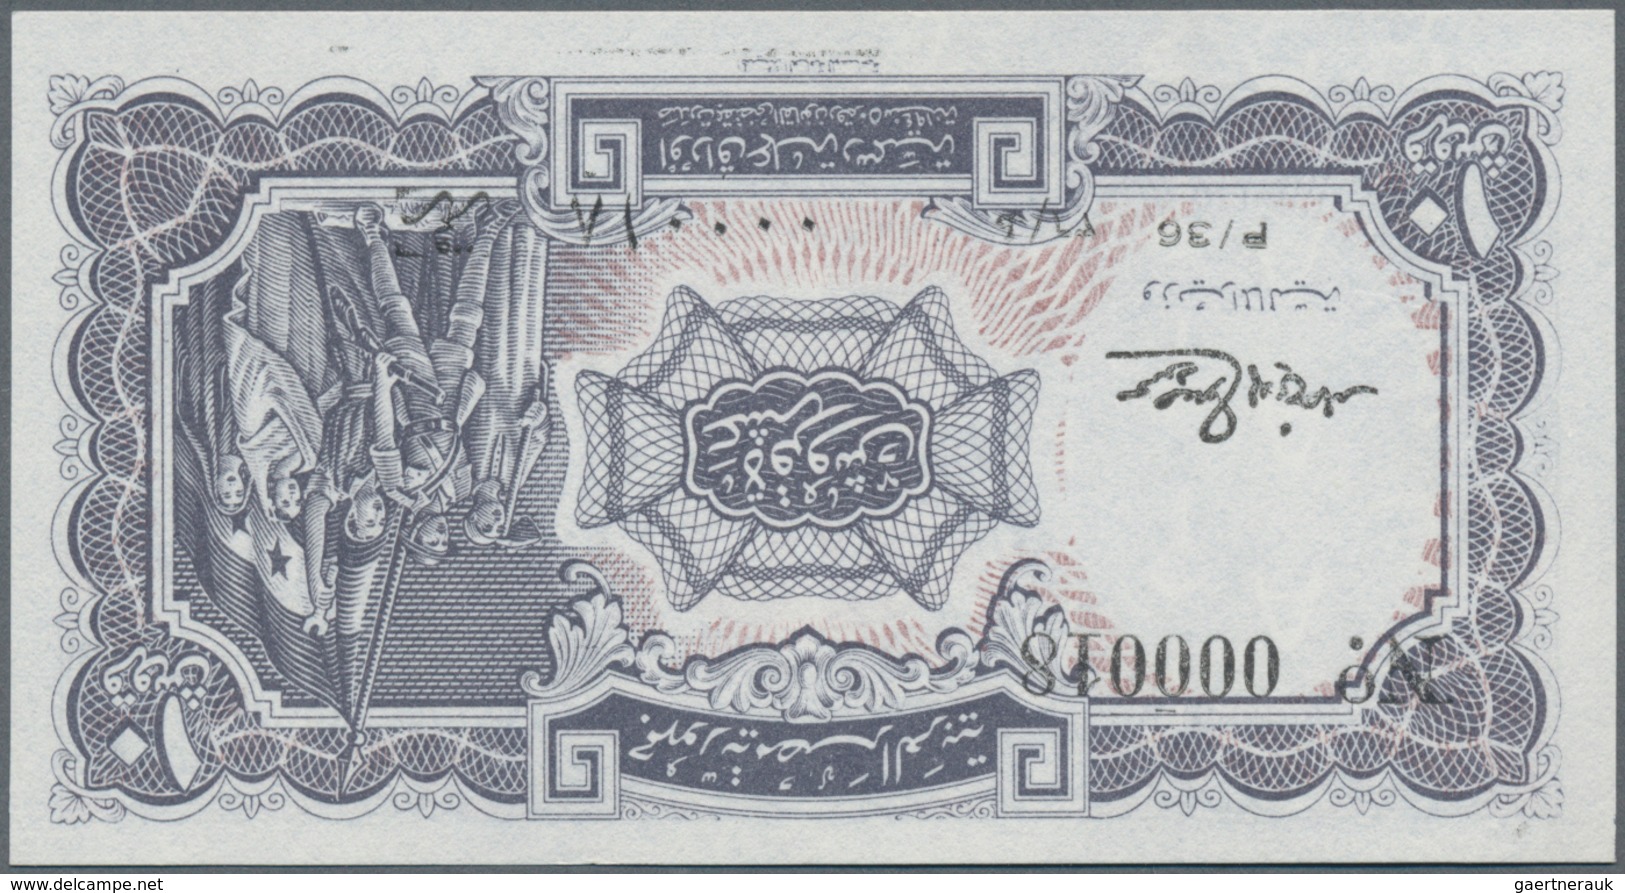 Egypt / Ägypten: Arab Republic Of Egypt 10 Piastres L.1940 (1971-86), P.183f With Serial Number 0000 - Egipto